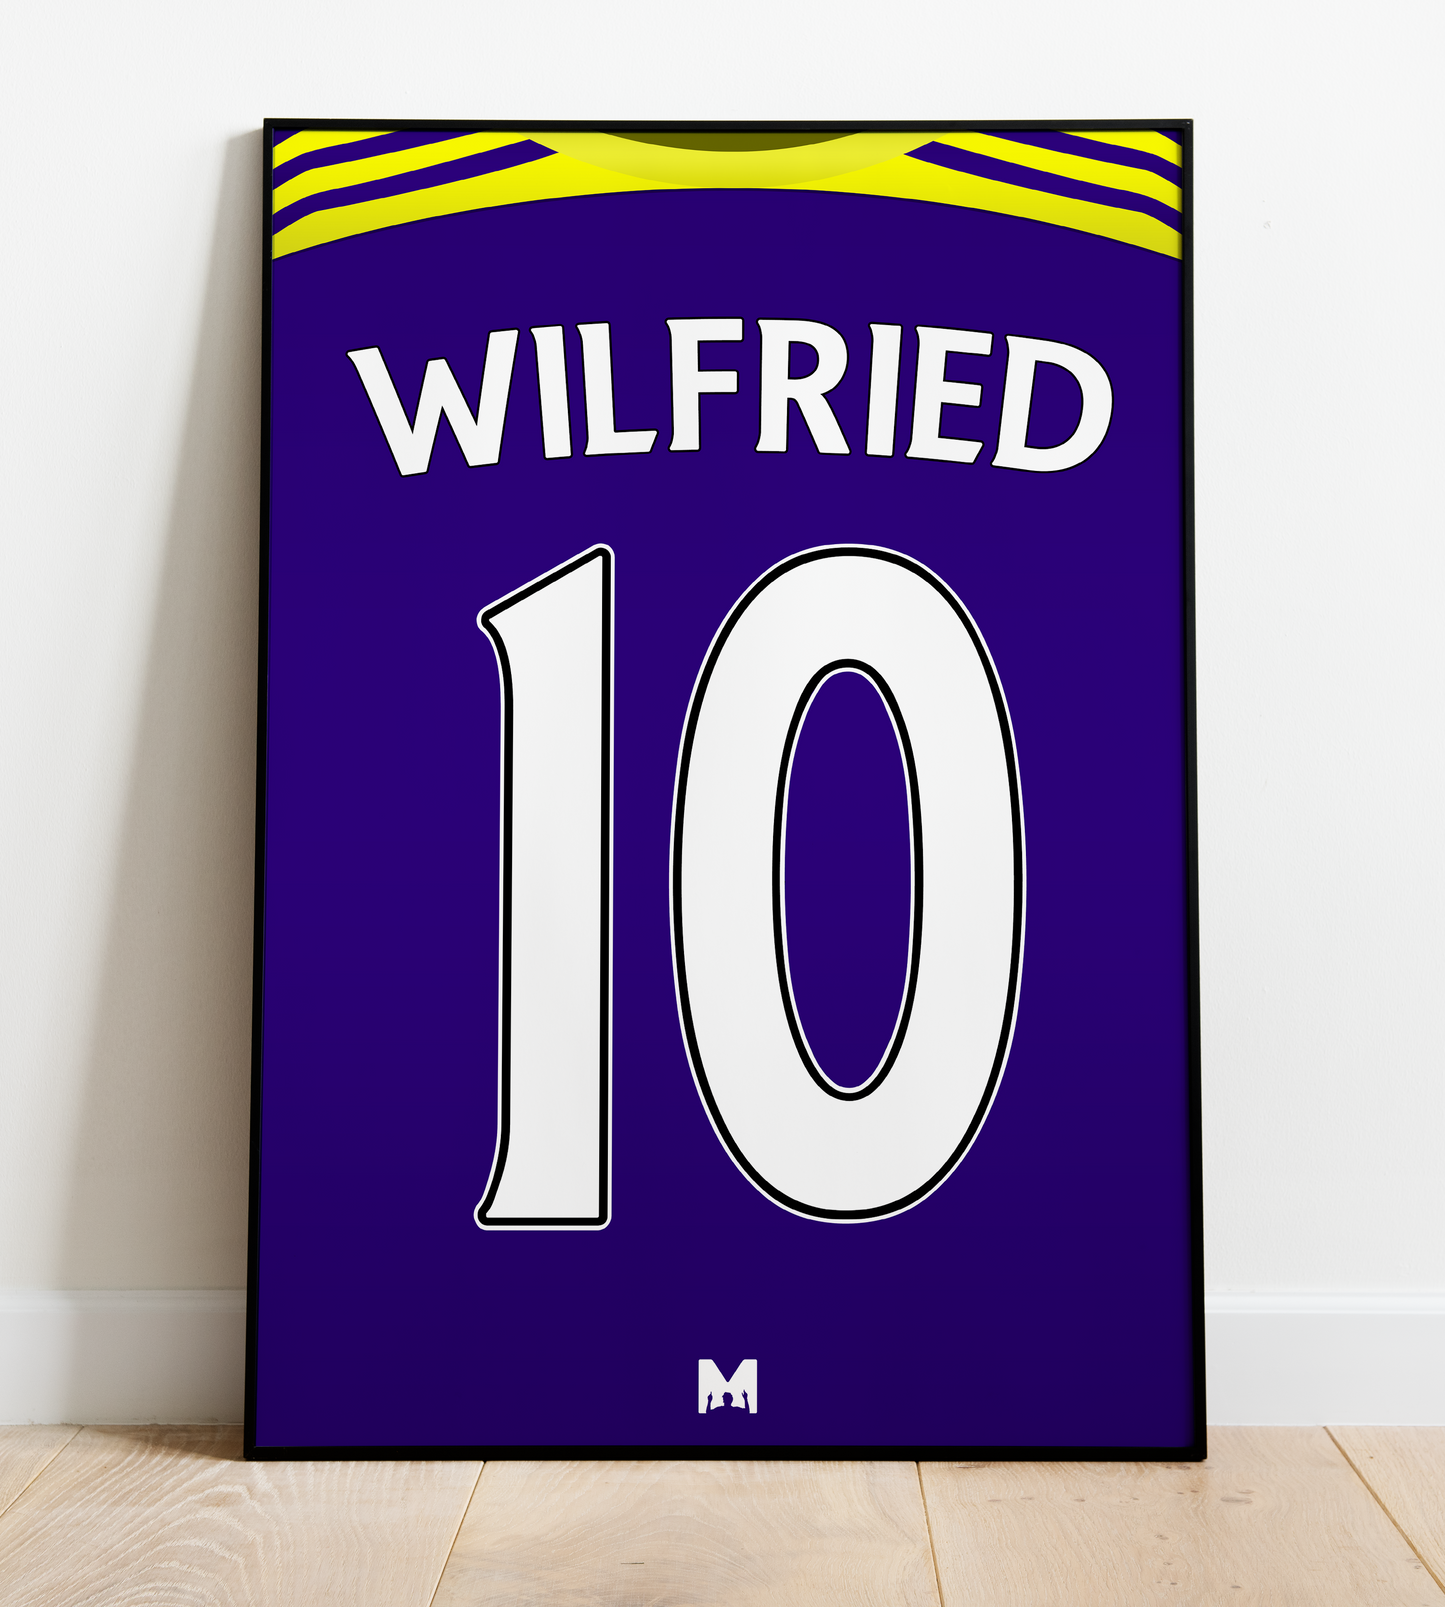 Wilfried Bony Shirt Print - Away Shirt 2013/14 - Swansea City